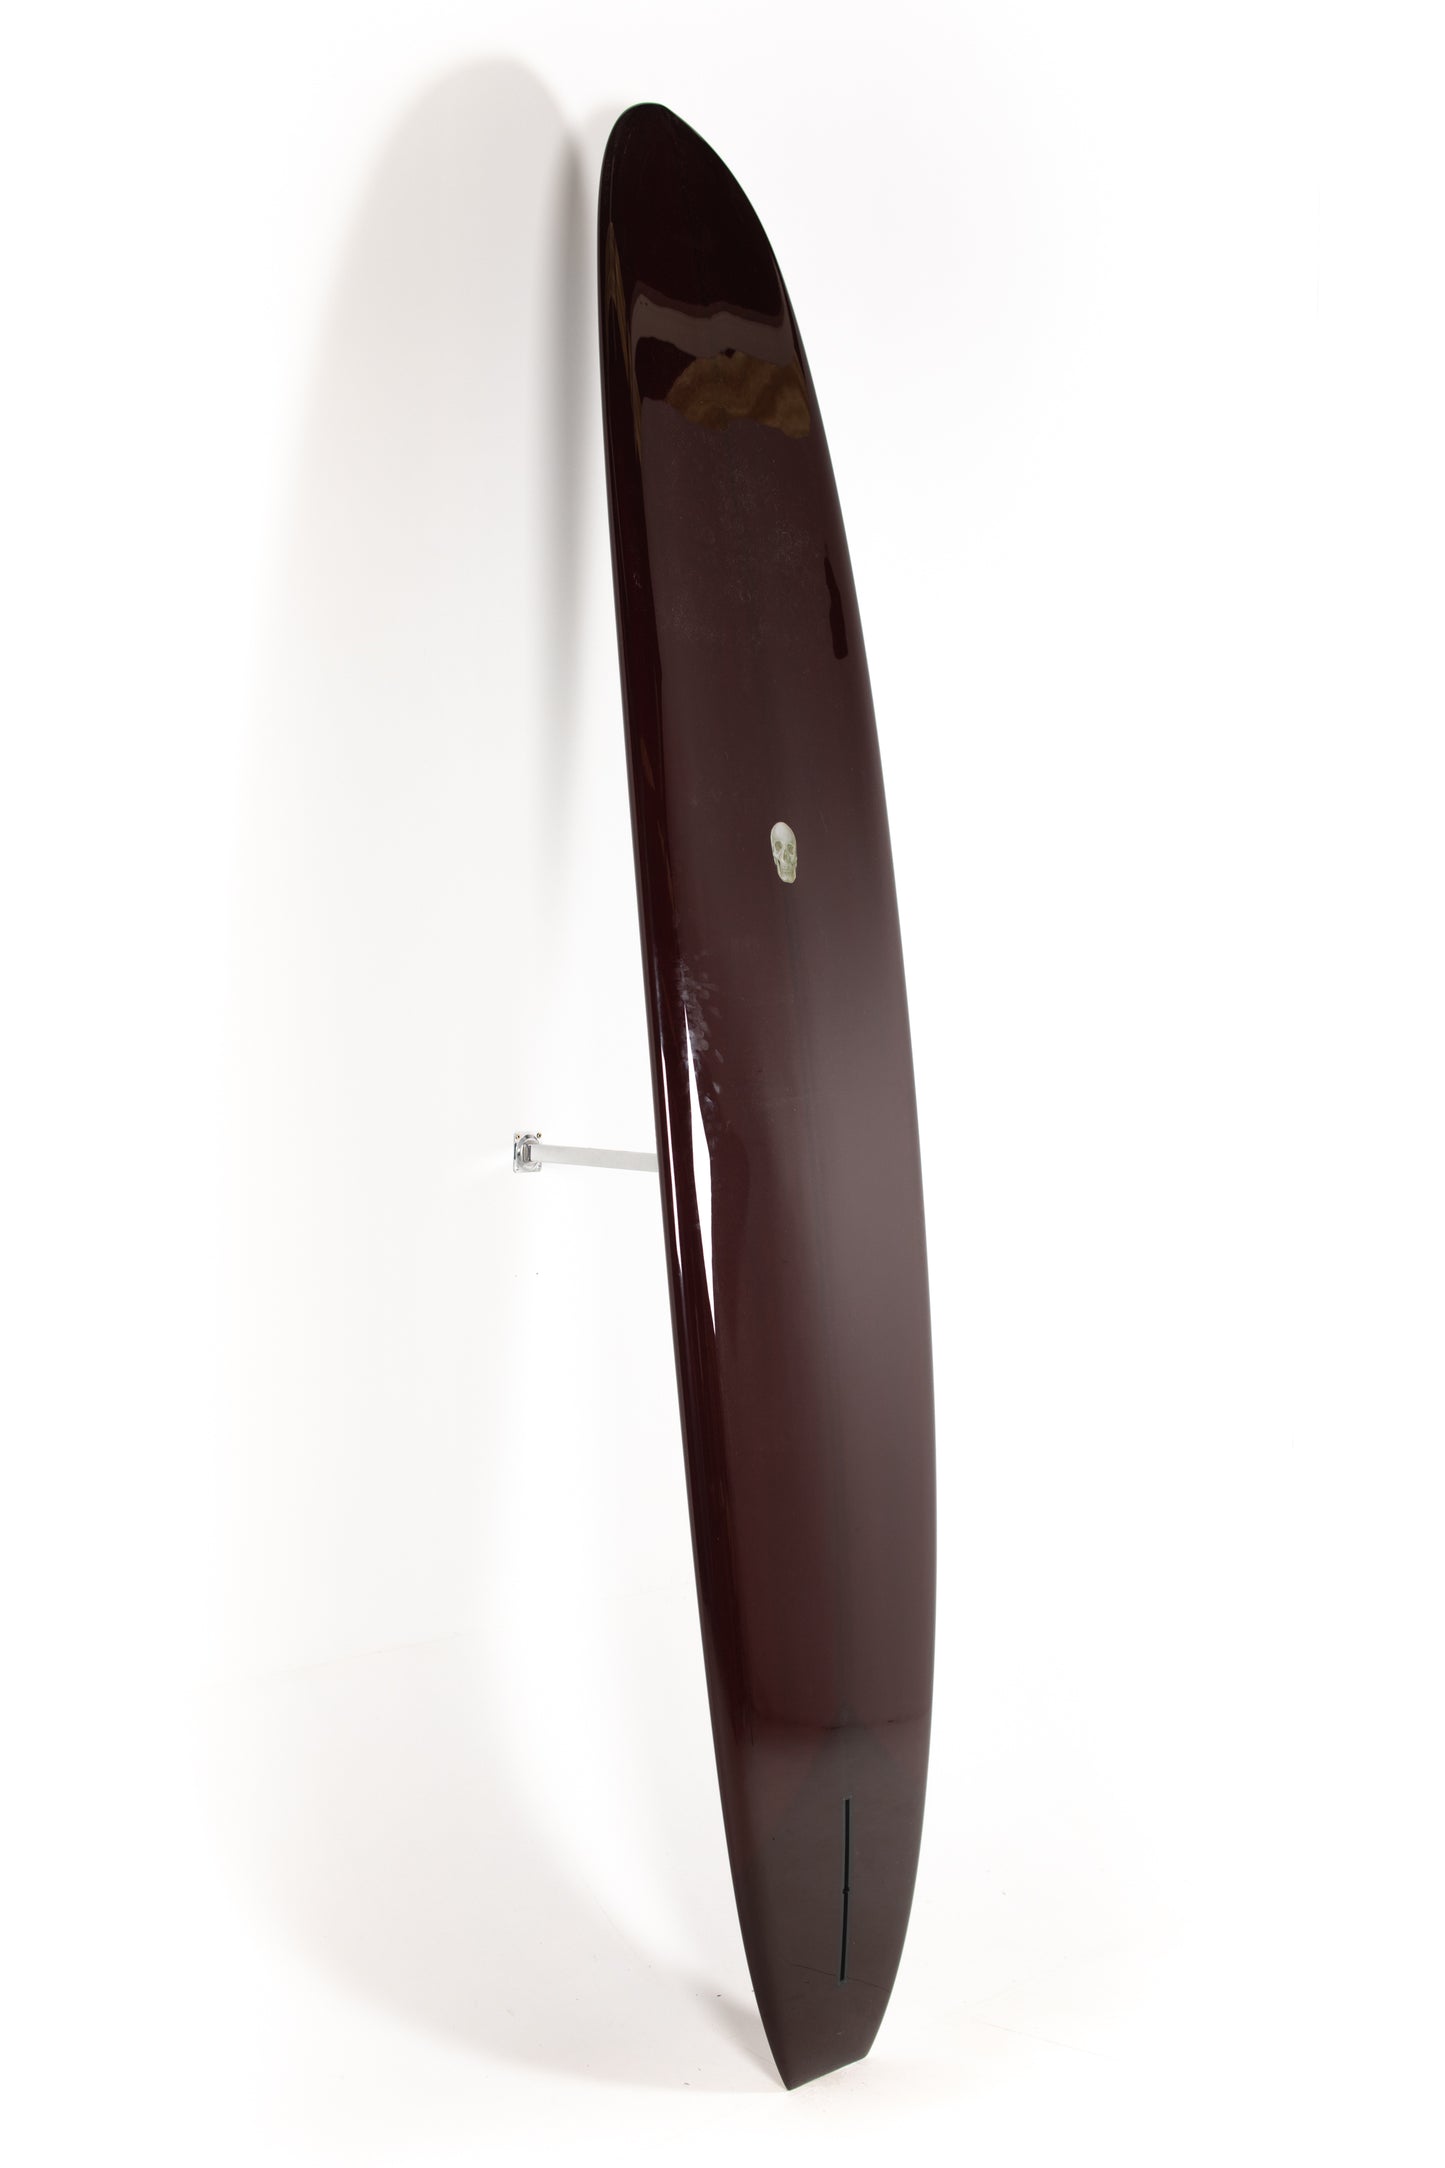 
                  
                    Pukas Surf Shop - Christenson Surfboard  - SCARLET BEGONIA by Chris Christenson - 9'3” x 23" x 2 13/16" - CX05216
                  
                